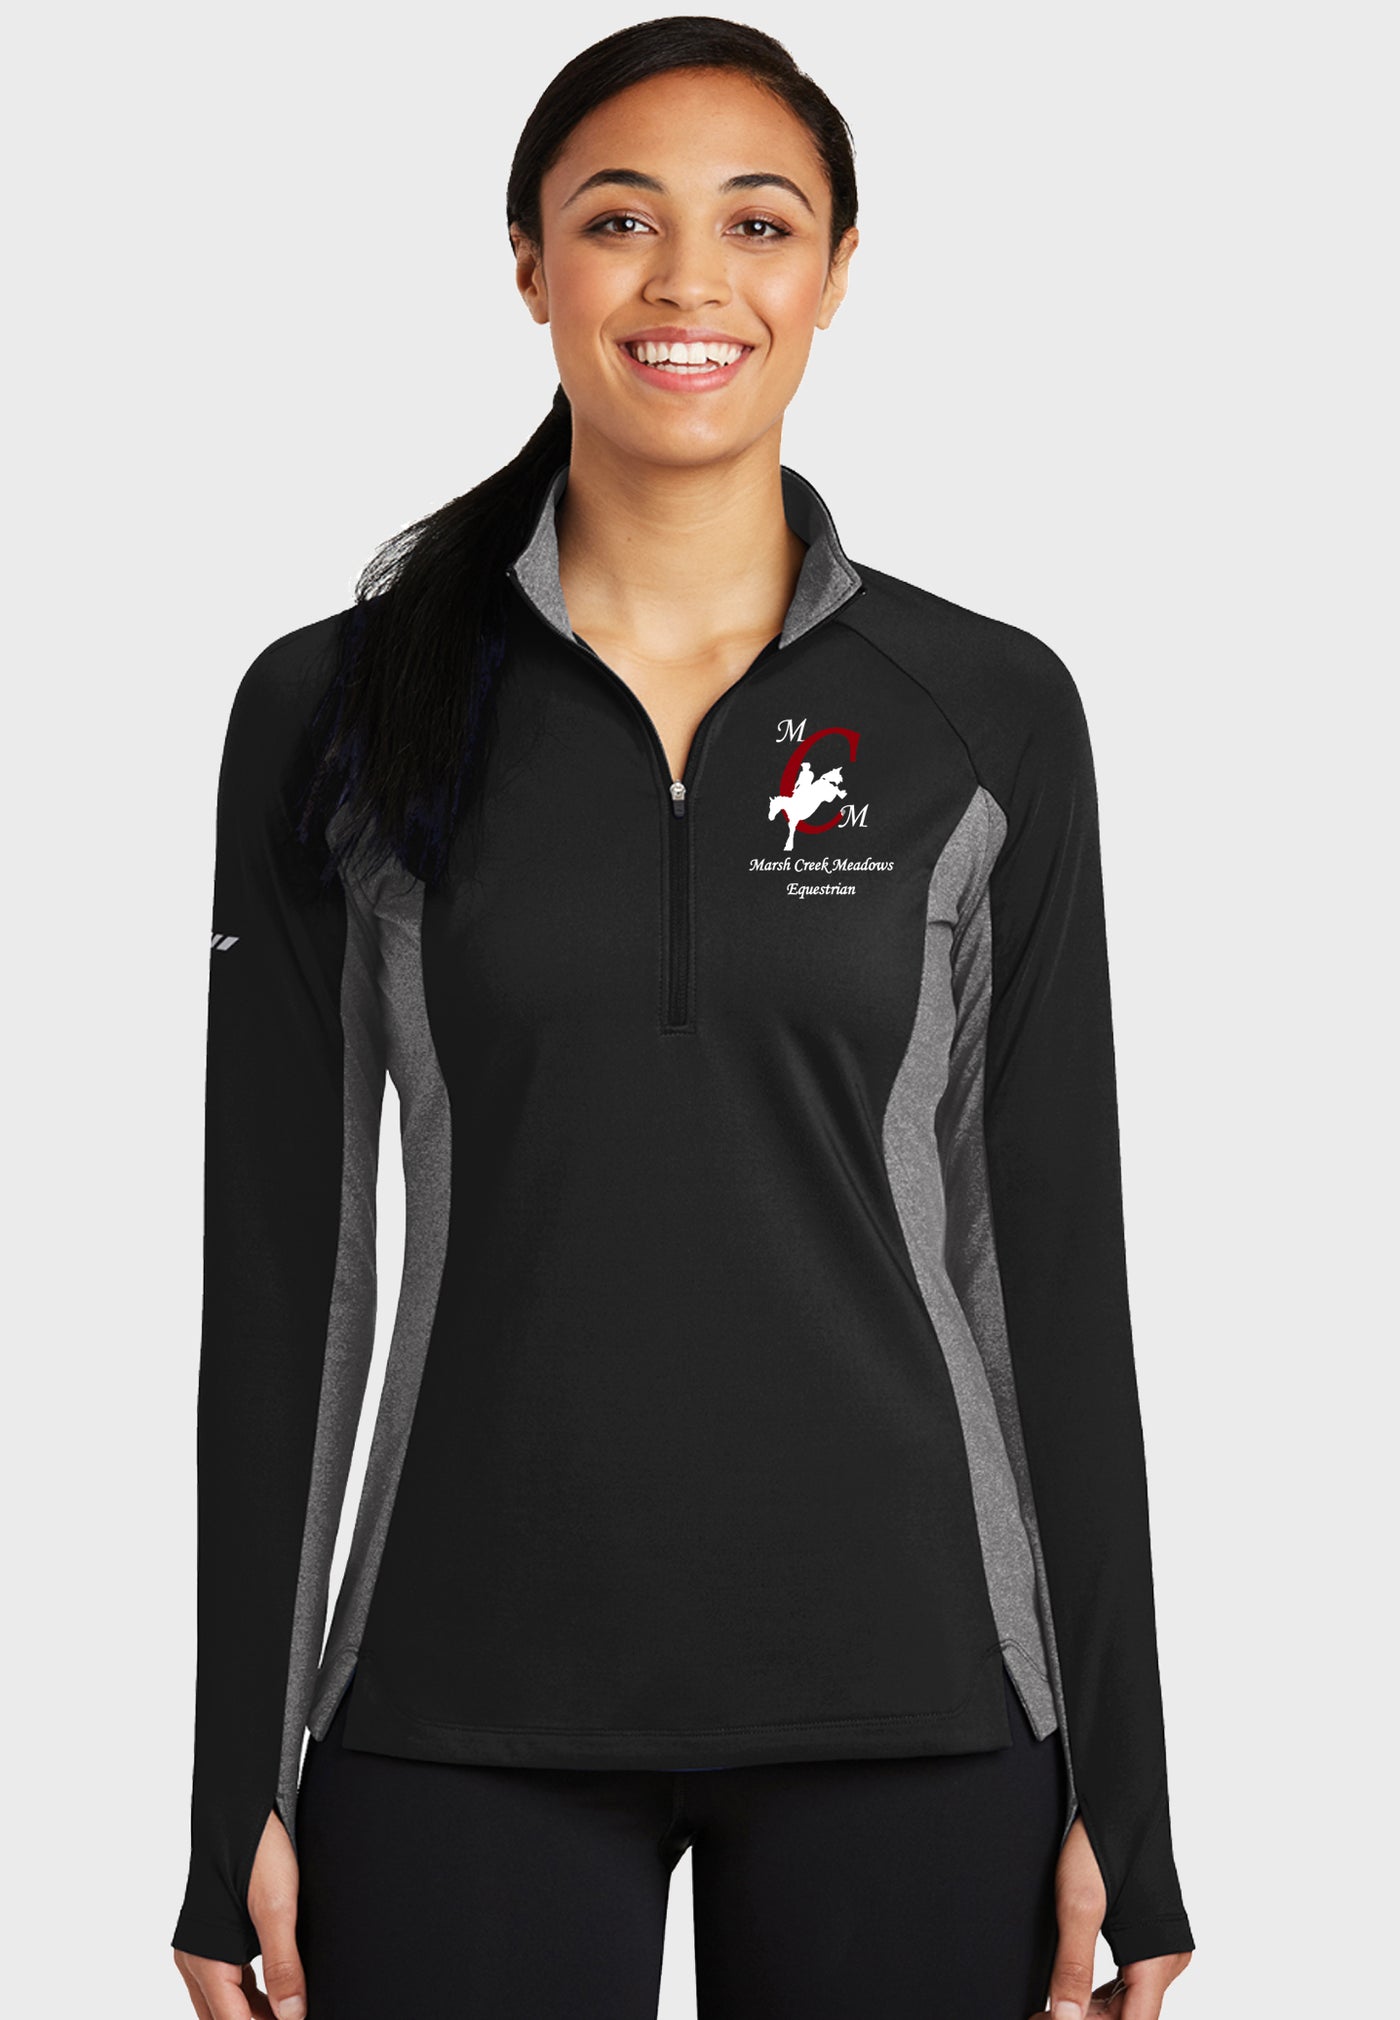 Marsh Creek Meadows Equestrian Sport-Tek® Ladies Sport-Wick® Stretch Contrast Black 1/2-Zip Pullover